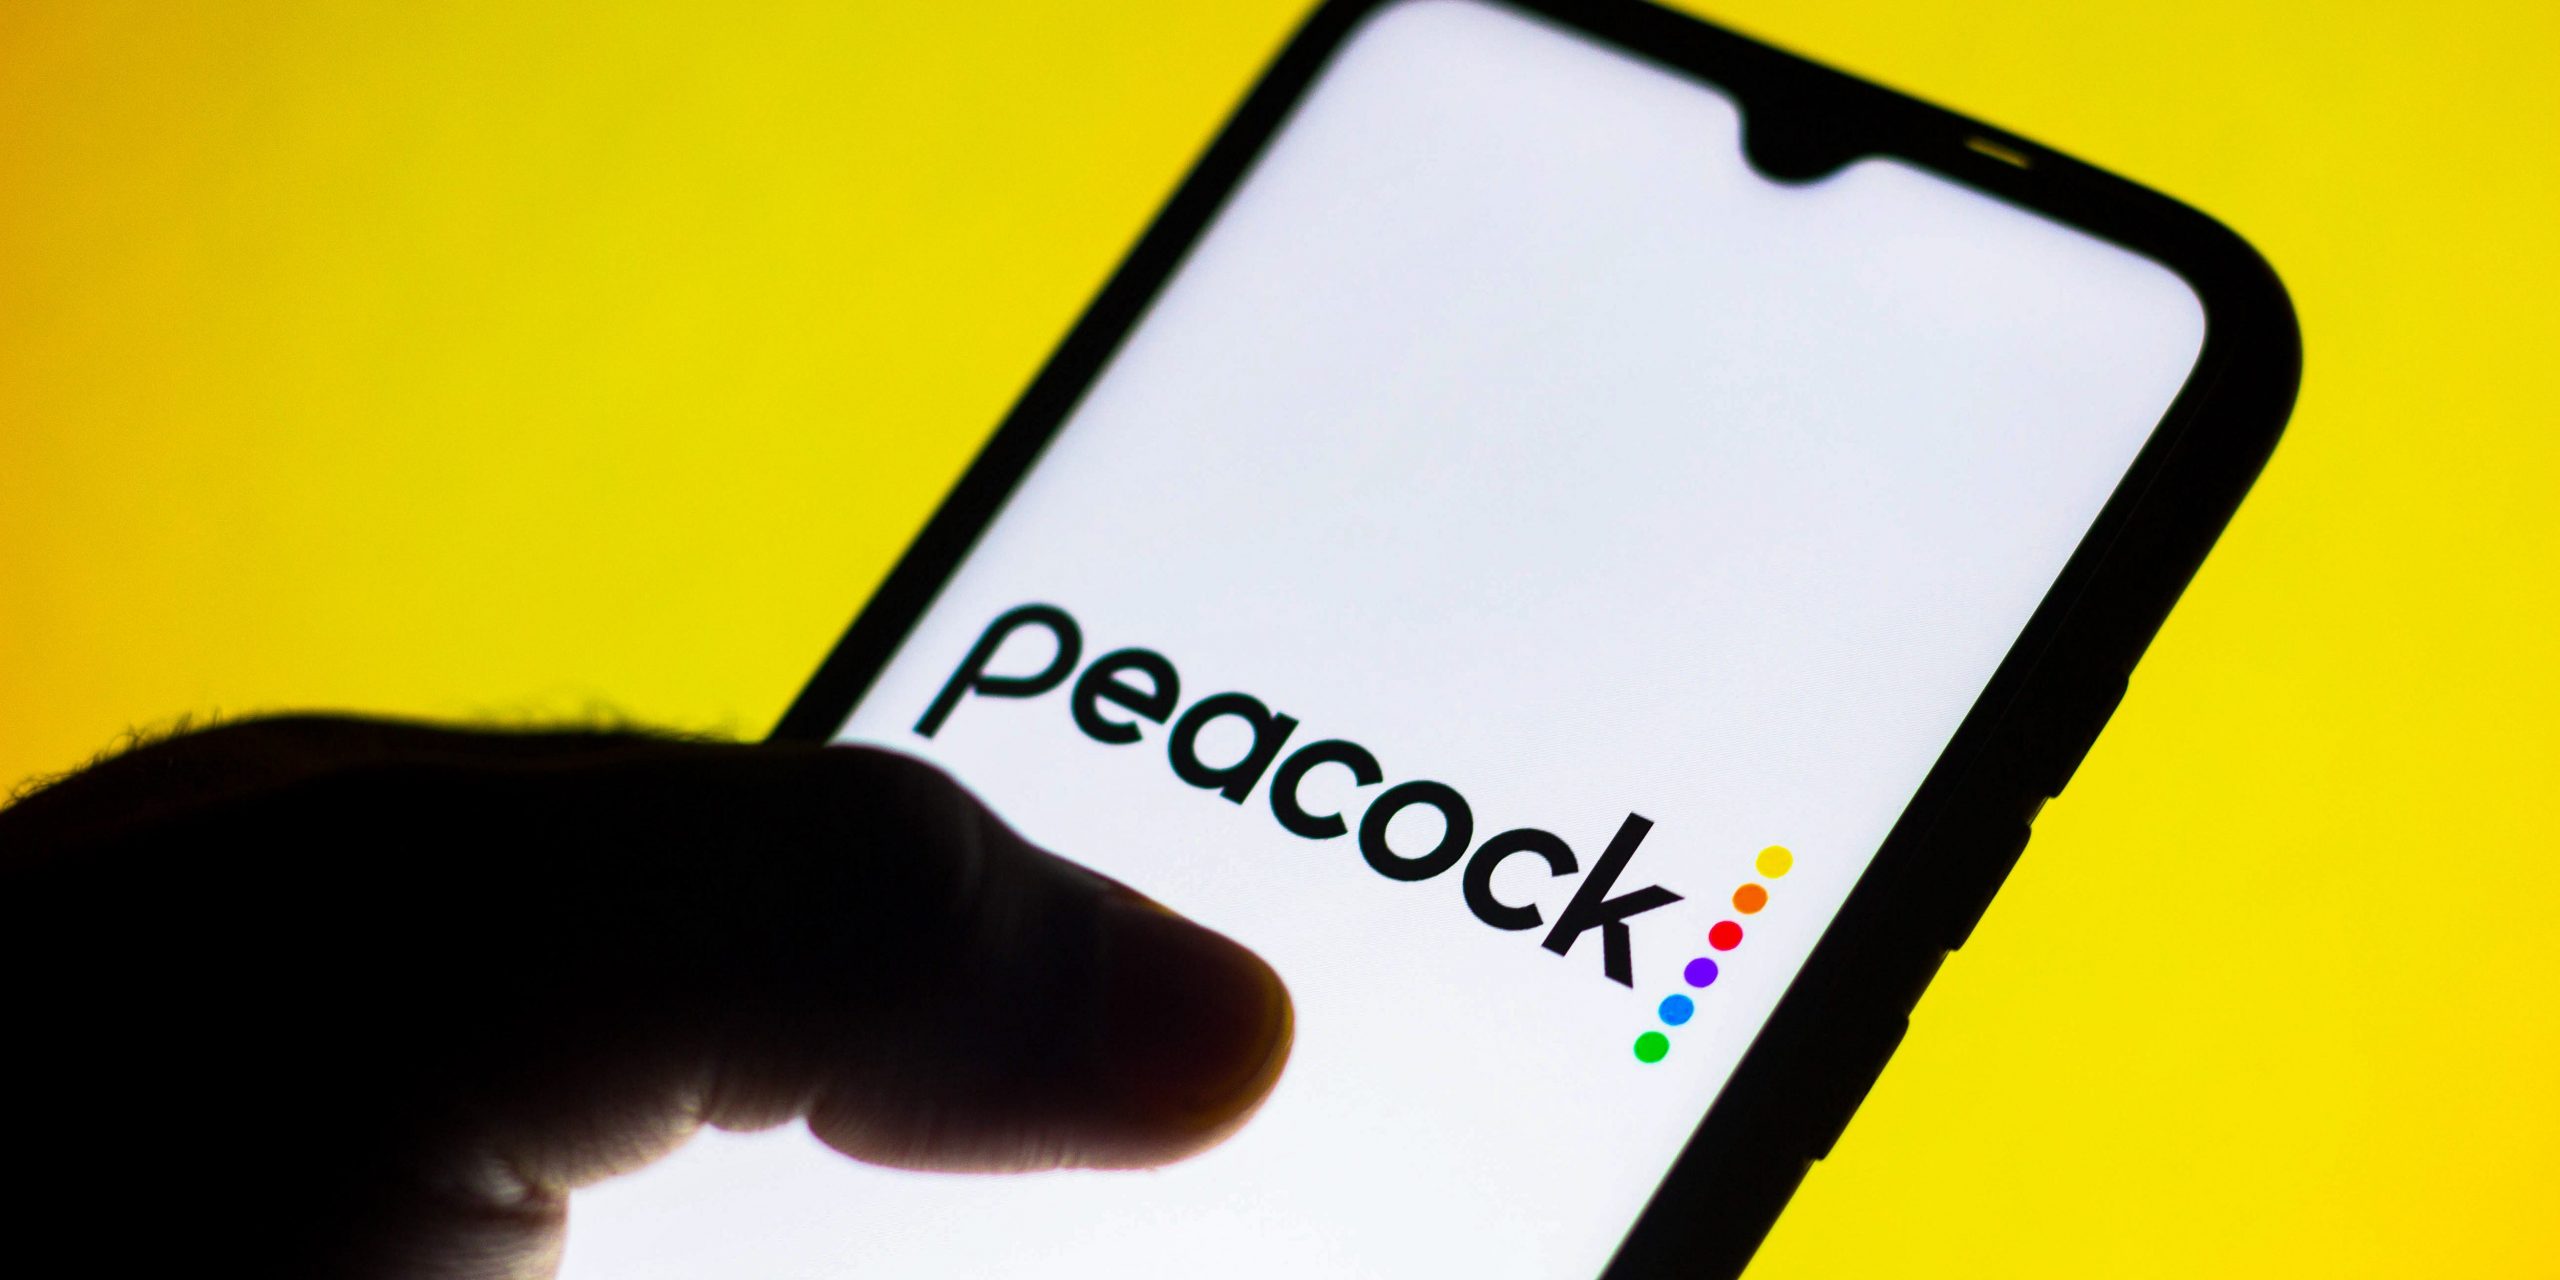 peacock logo on phone